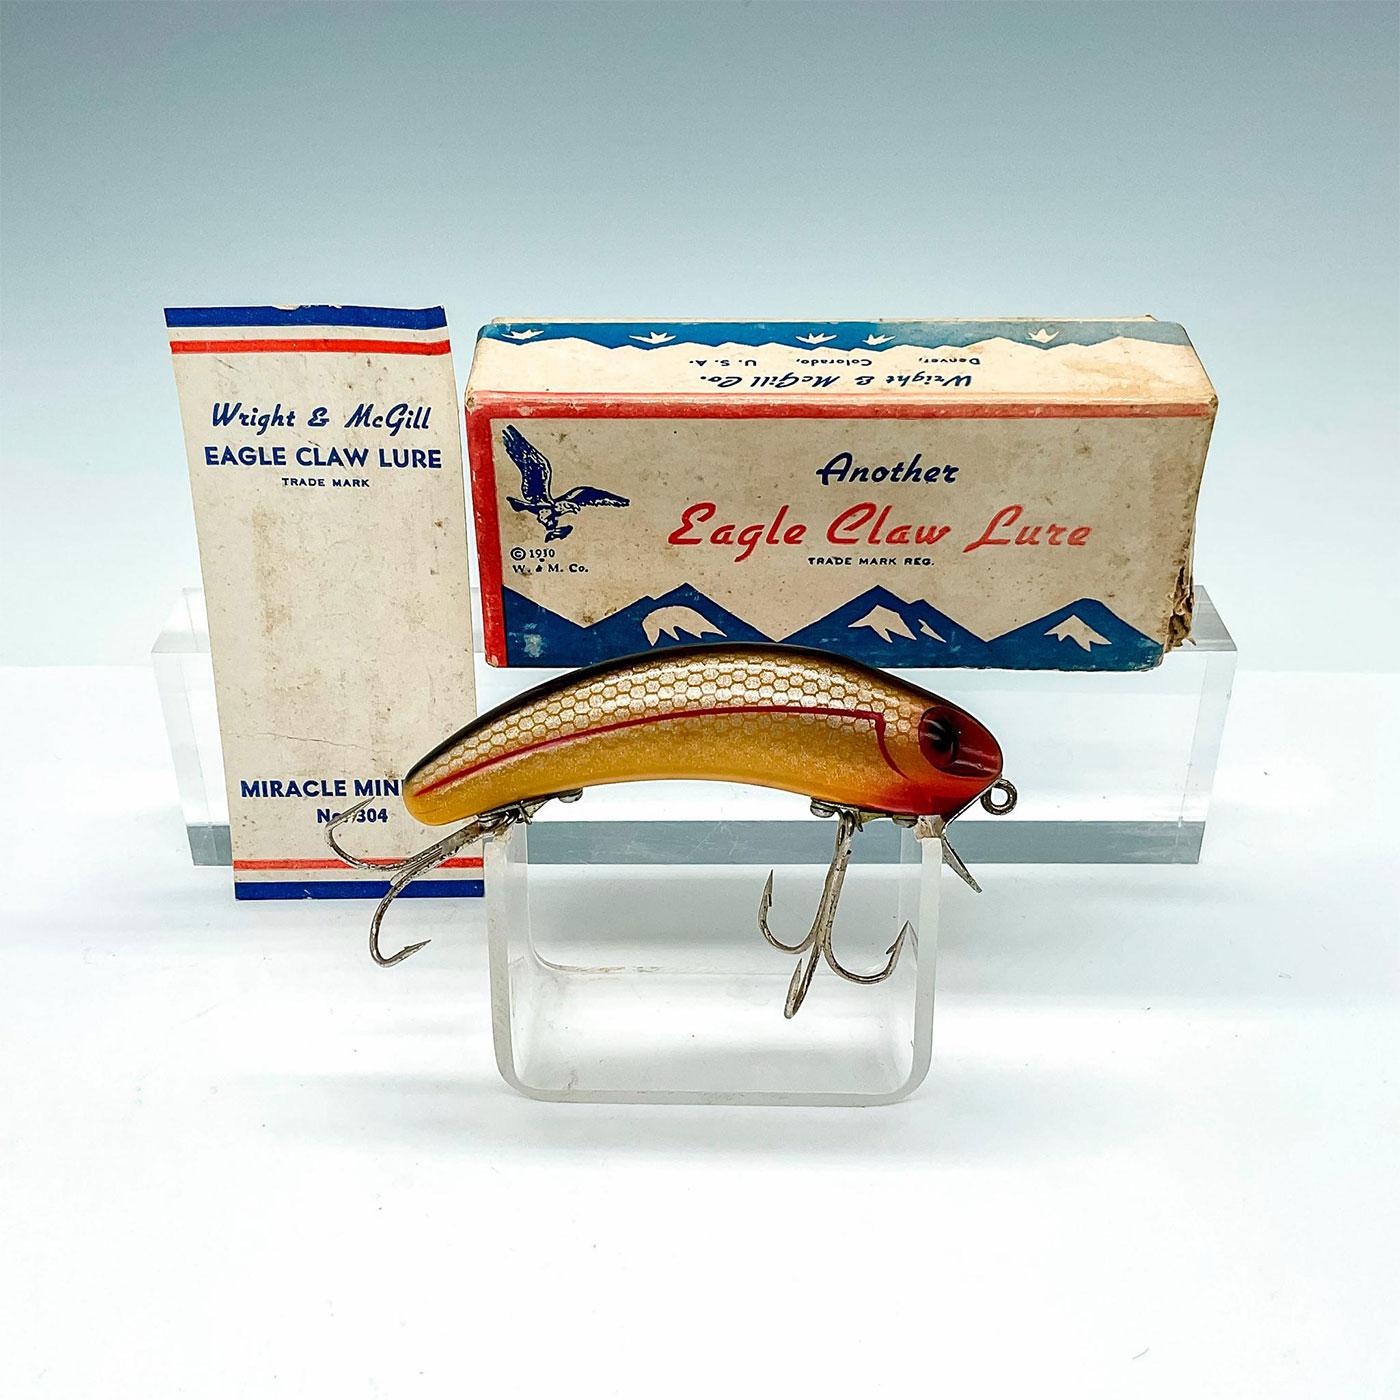 Sold at Auction: 3 Helin Flatfish Fishing Lures & 1 Original Box